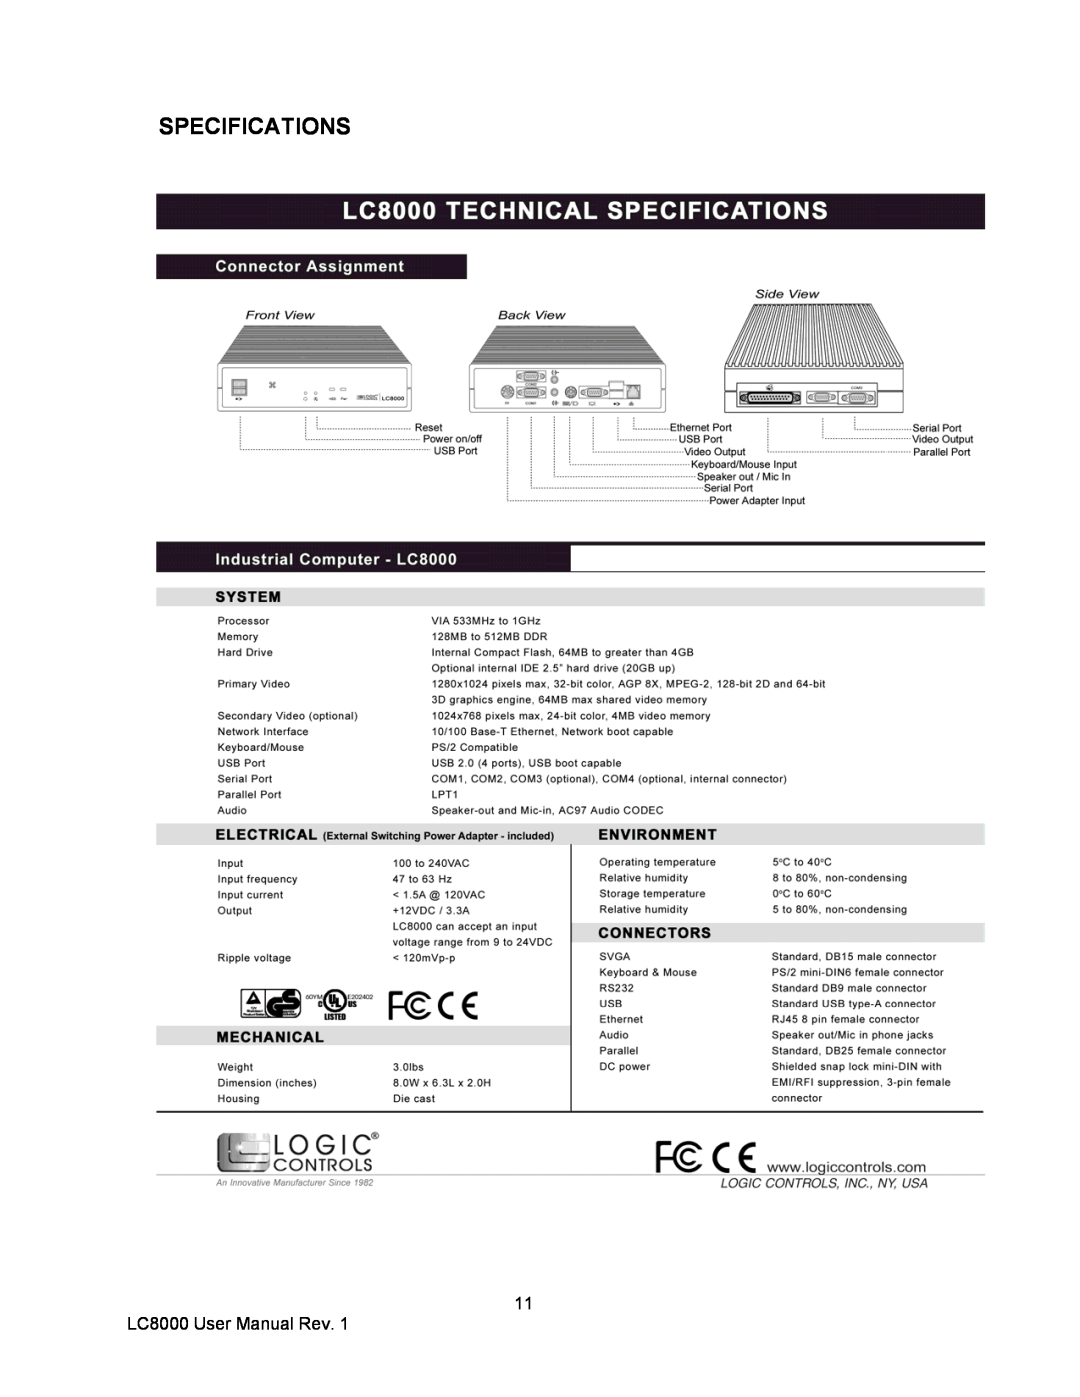 Logic Controls user manual Specifications, LC8000 User Manual Rev 